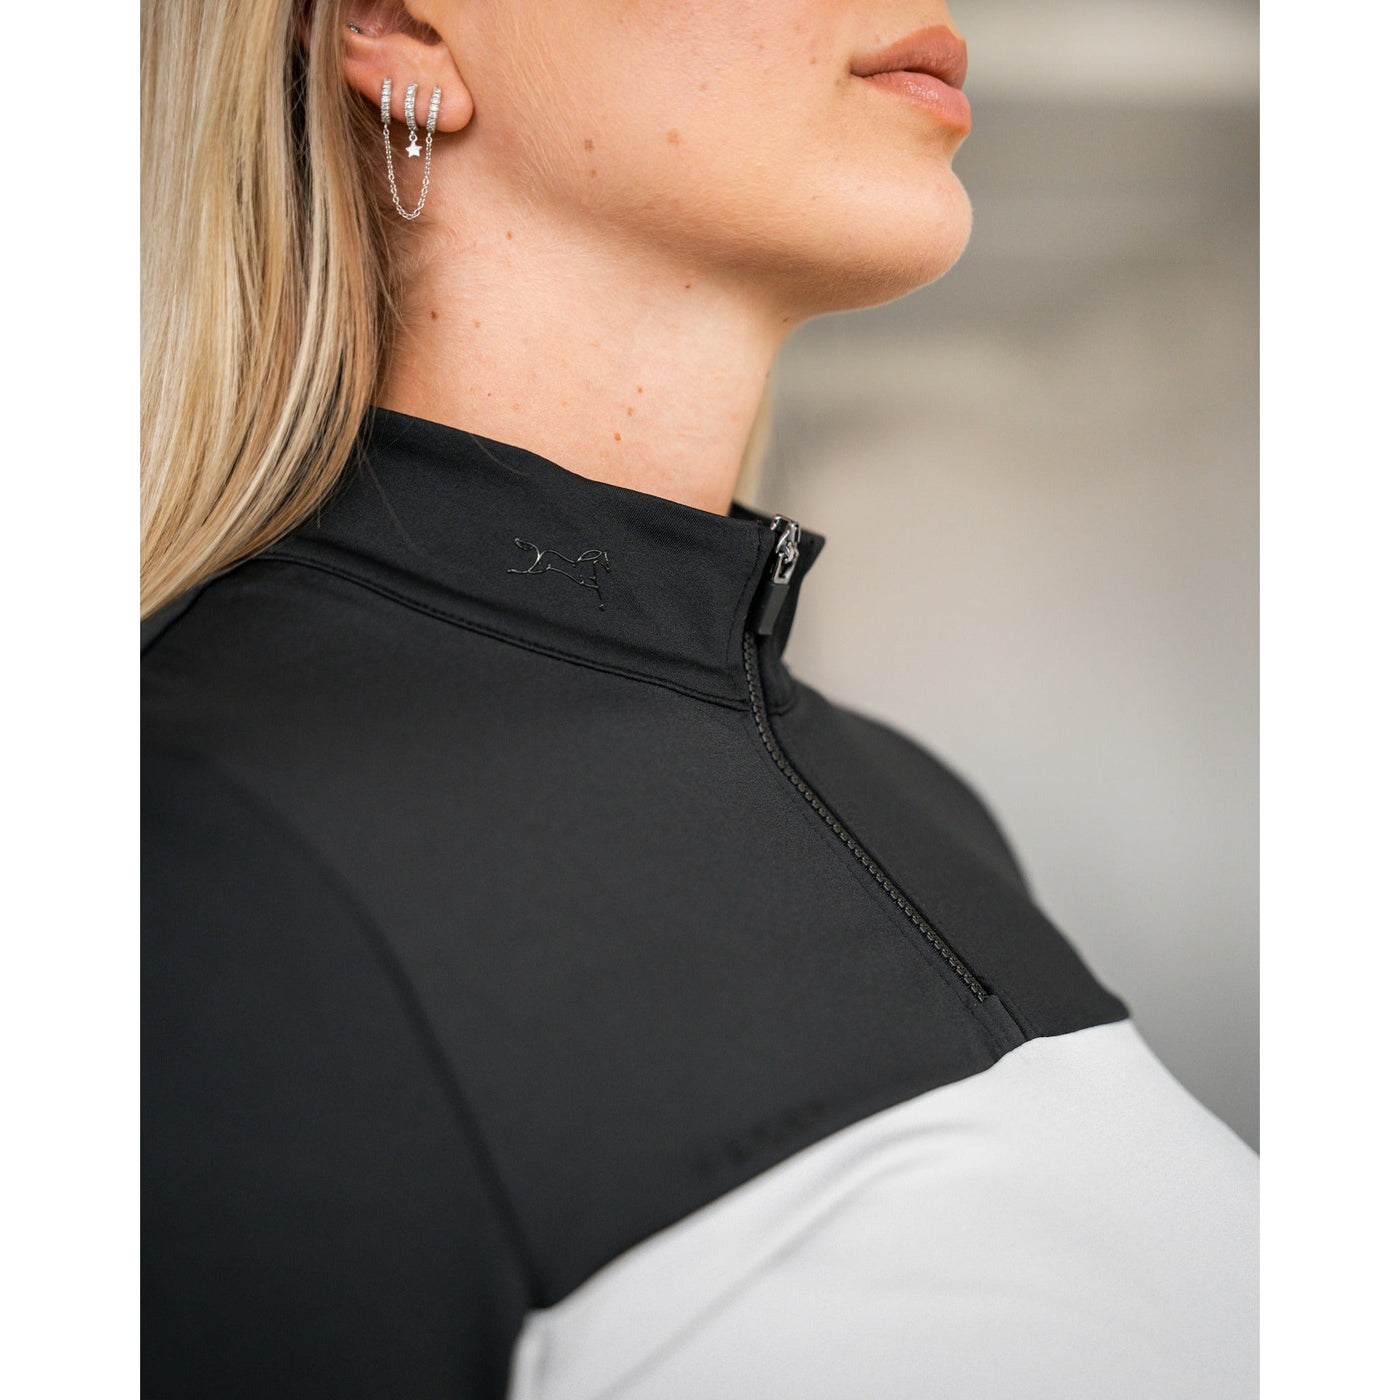 Fager Naomi Long Sleeve Shirt Black/Grey